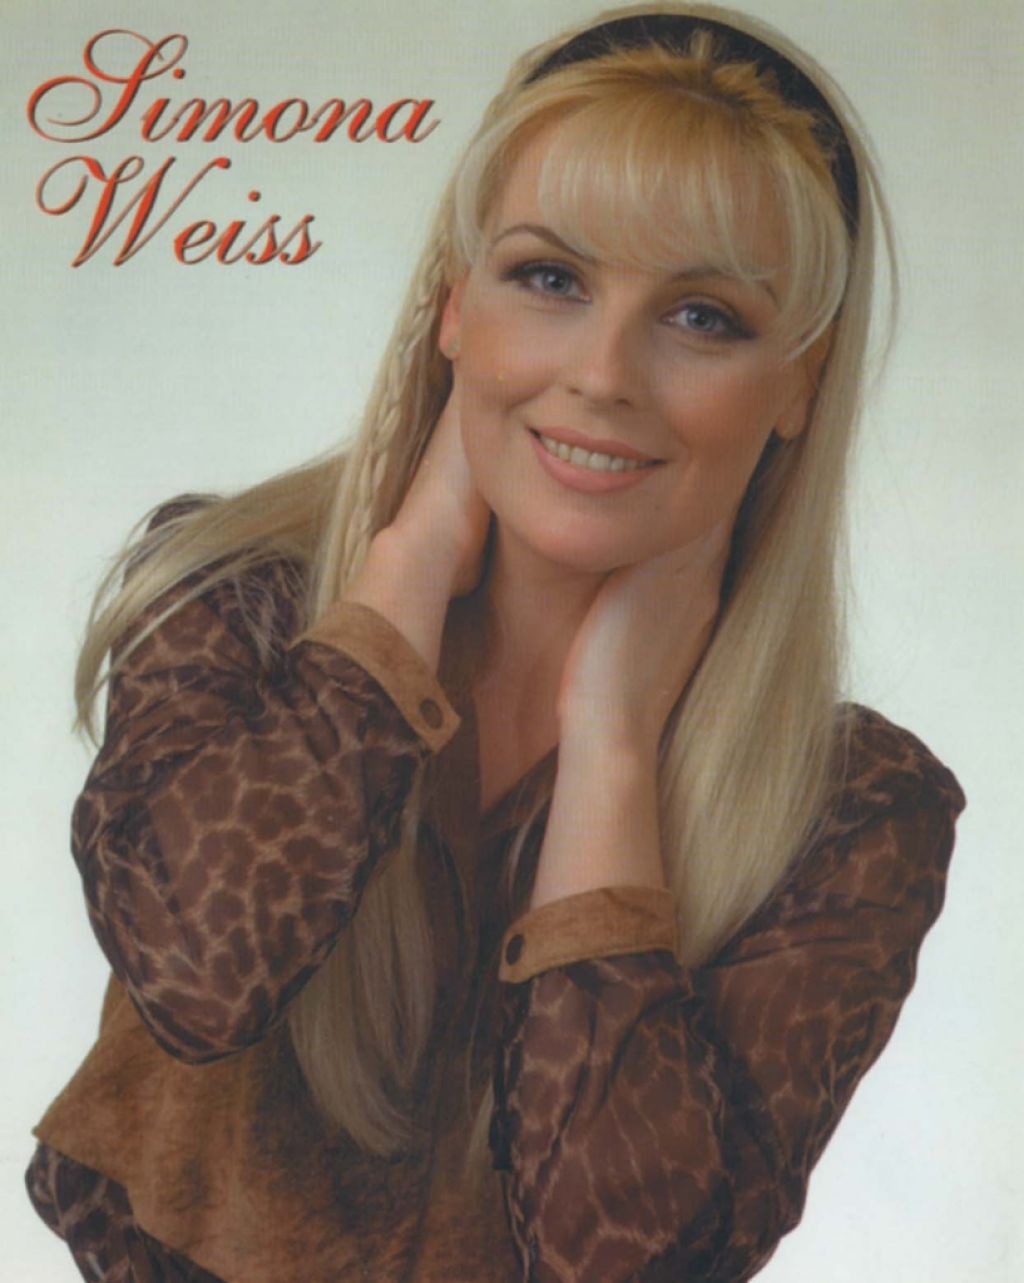 Umrla je slovenska glasbenica Simona Weiss